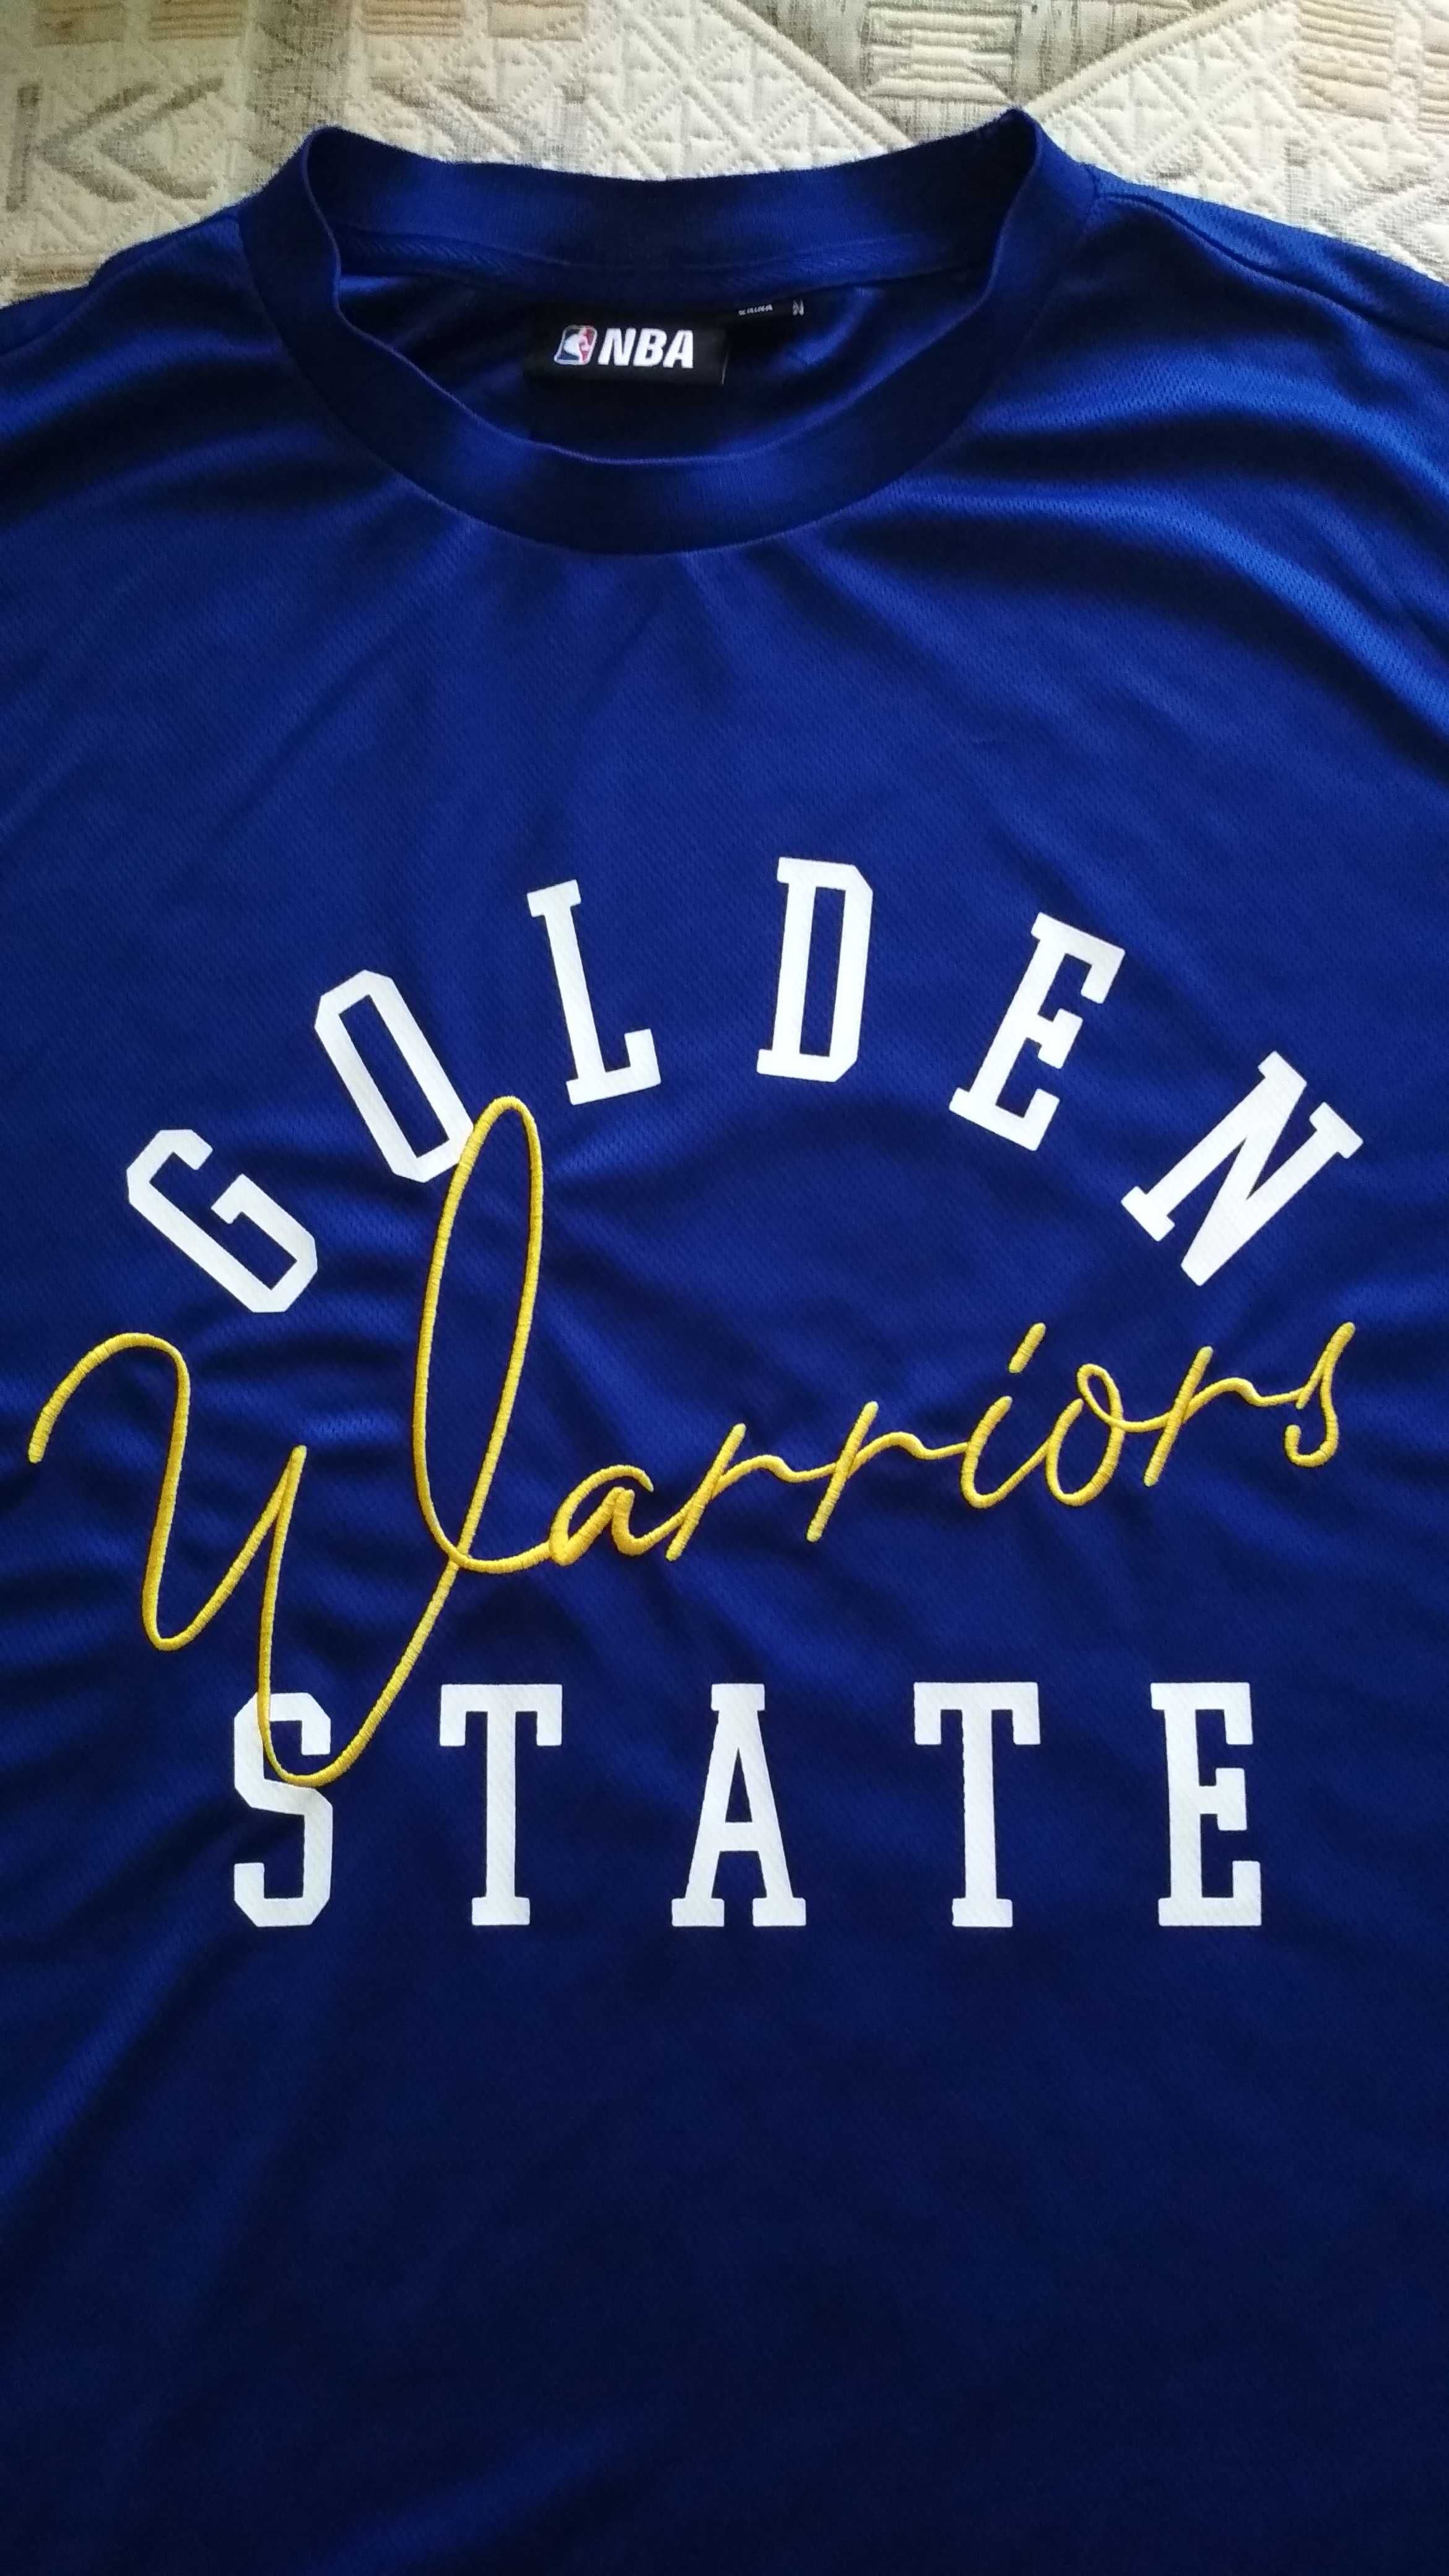 Футболка NBA Golden State Warriors (L-XL) редкая модель Original